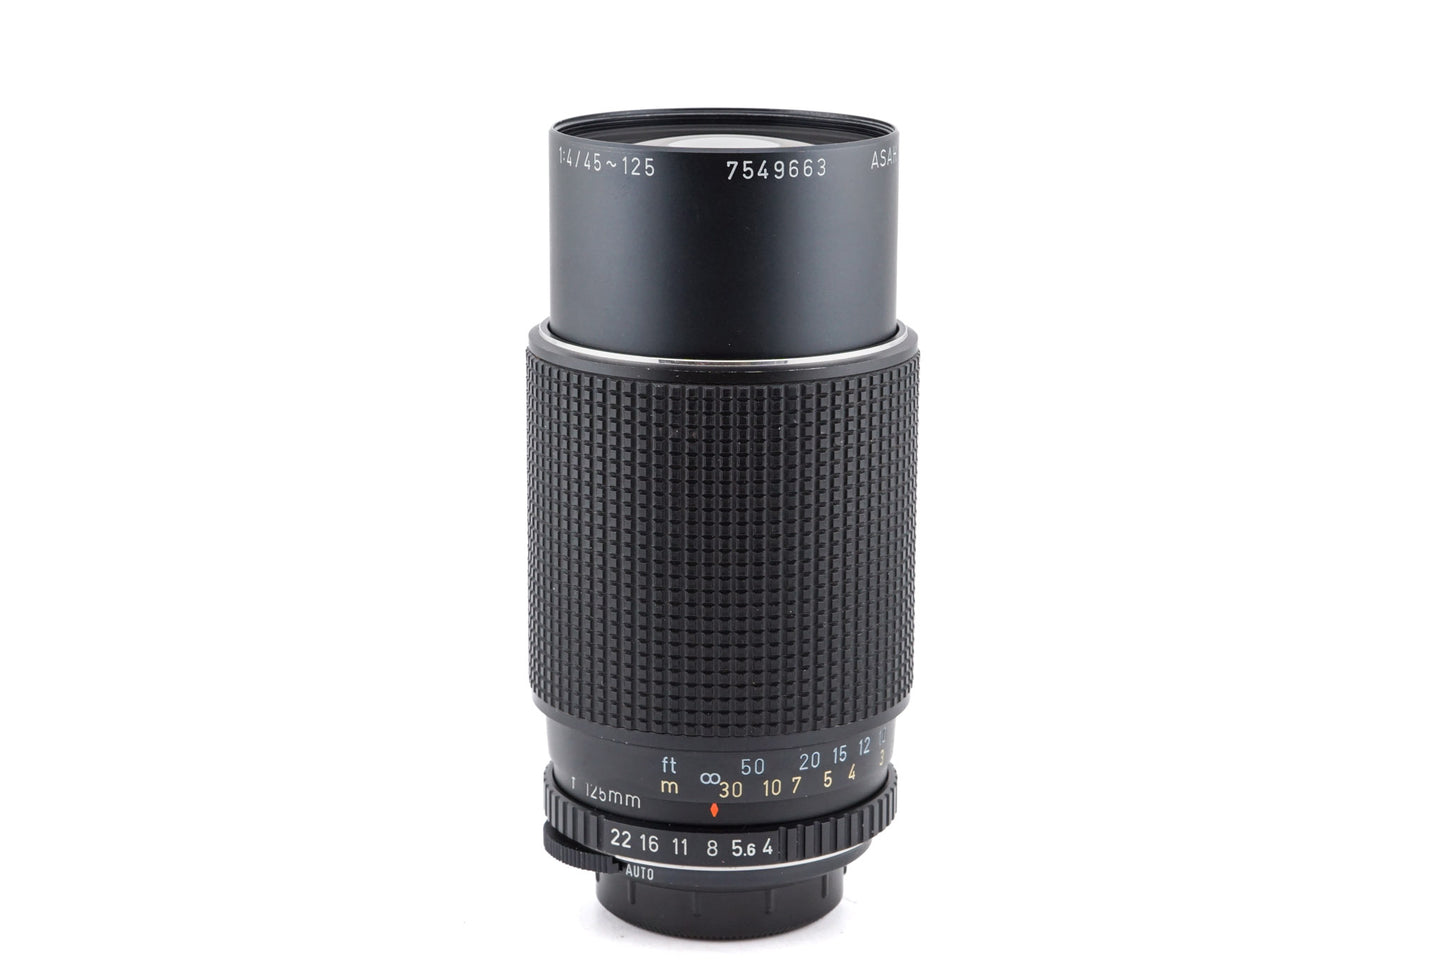 Pentax 45-125mm f4 SMC Takumar-Zoom - Lens